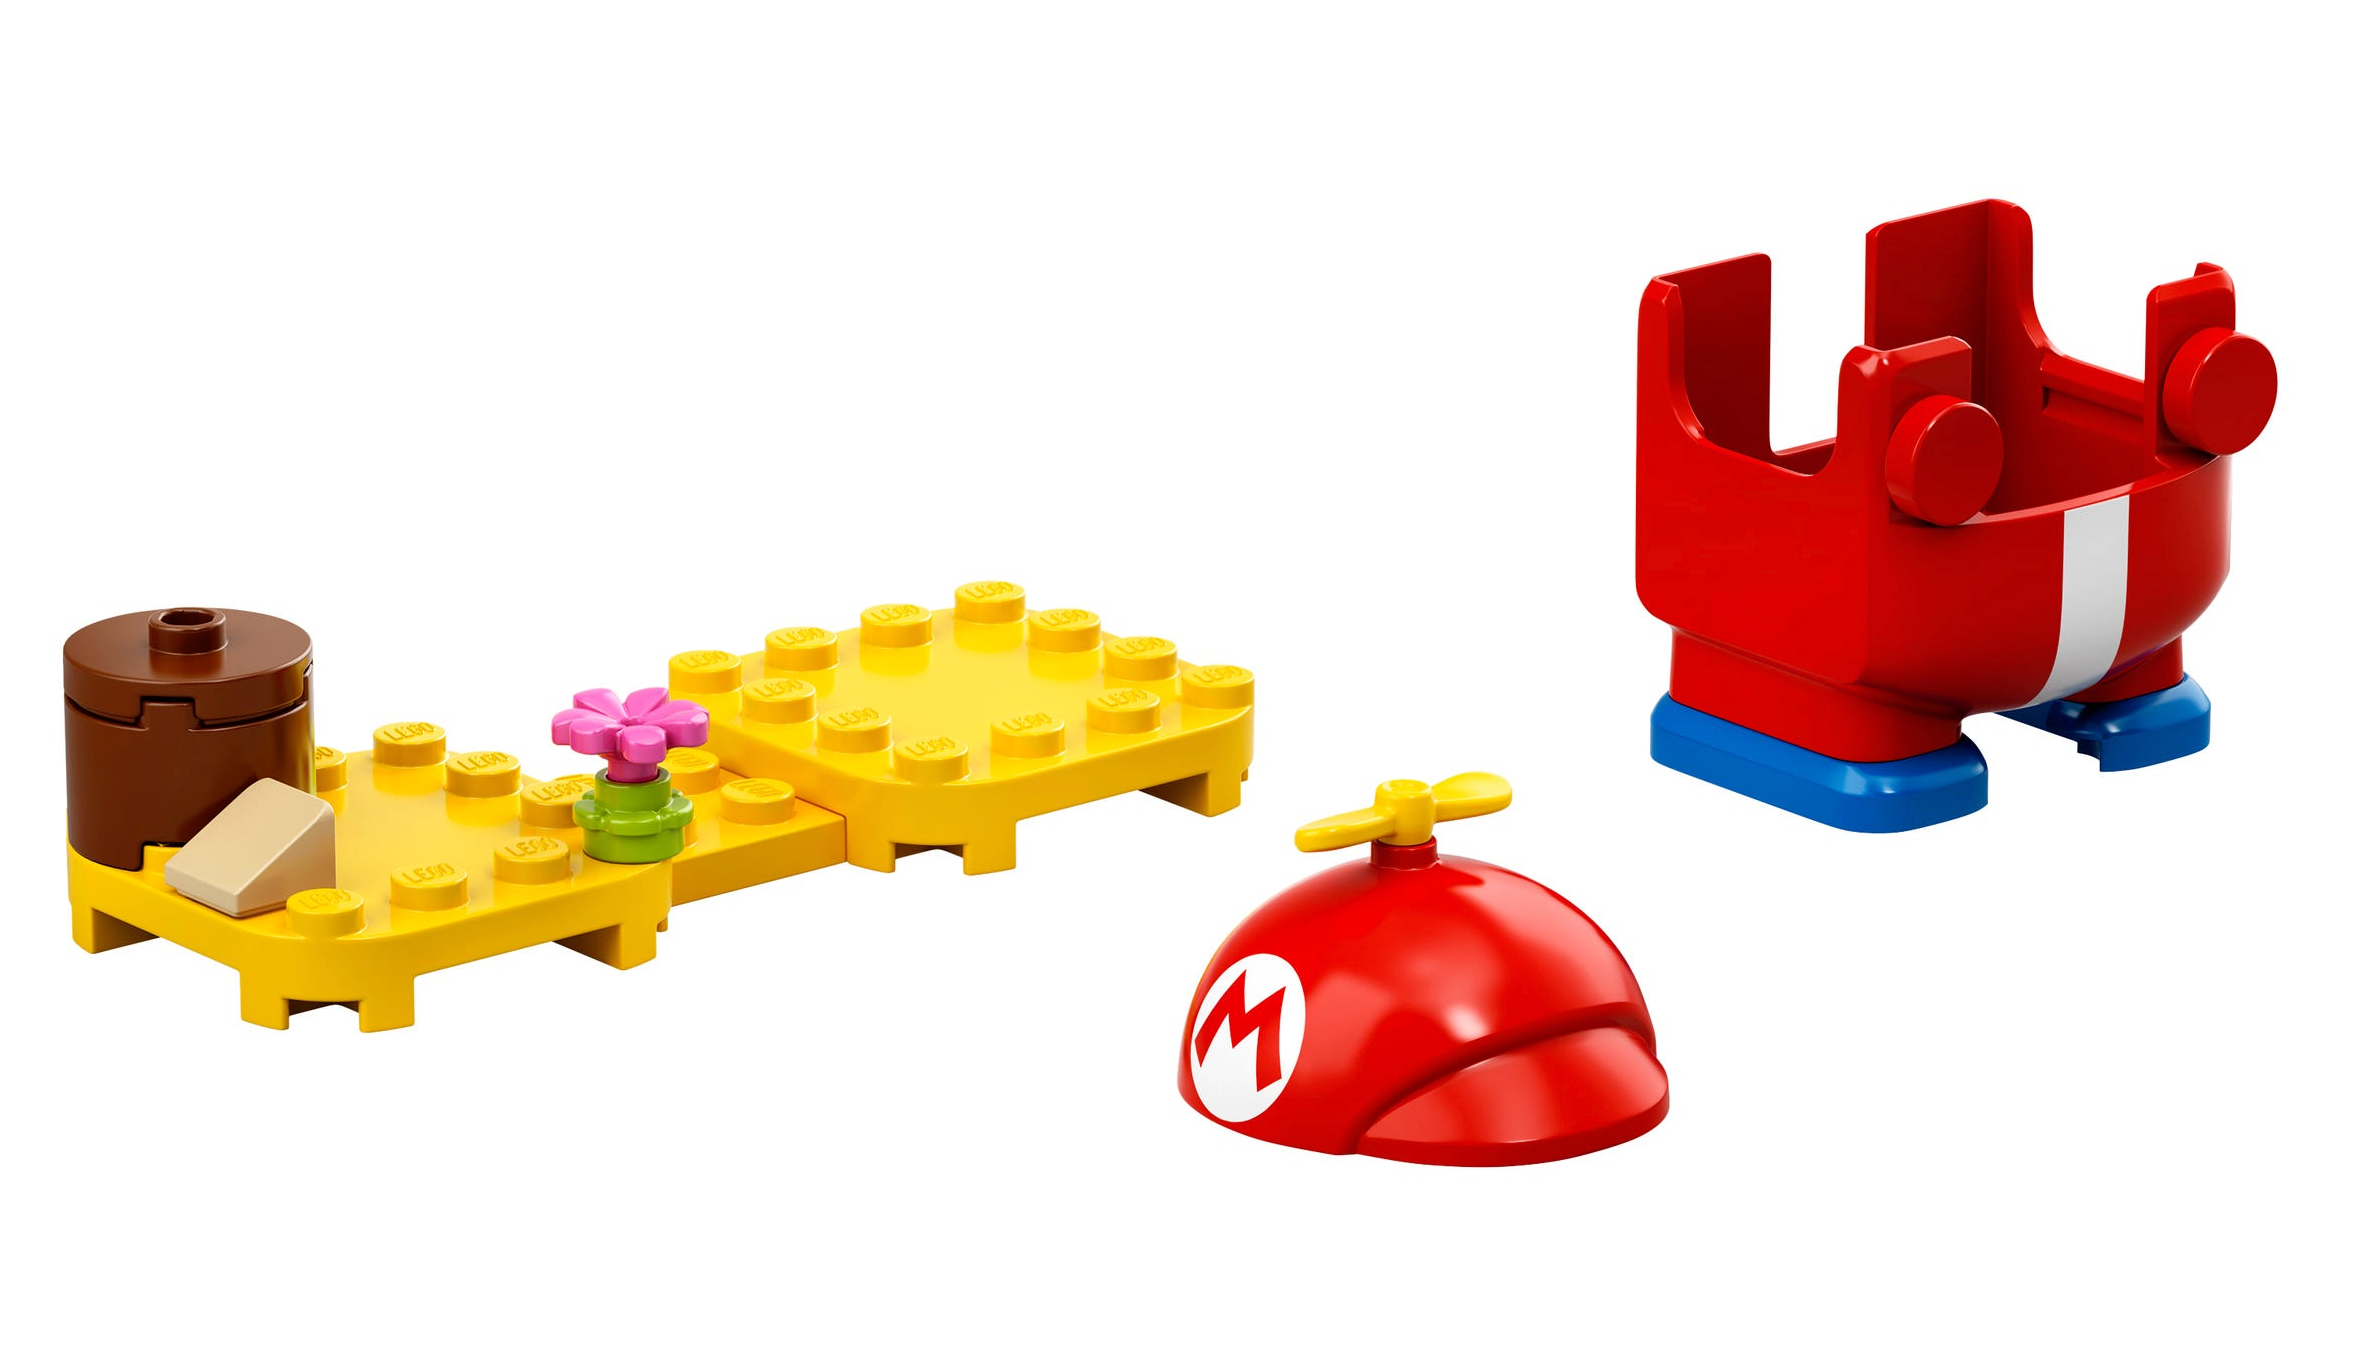 LEGO: Super Mario - Propeller Mario Power-Up Pack